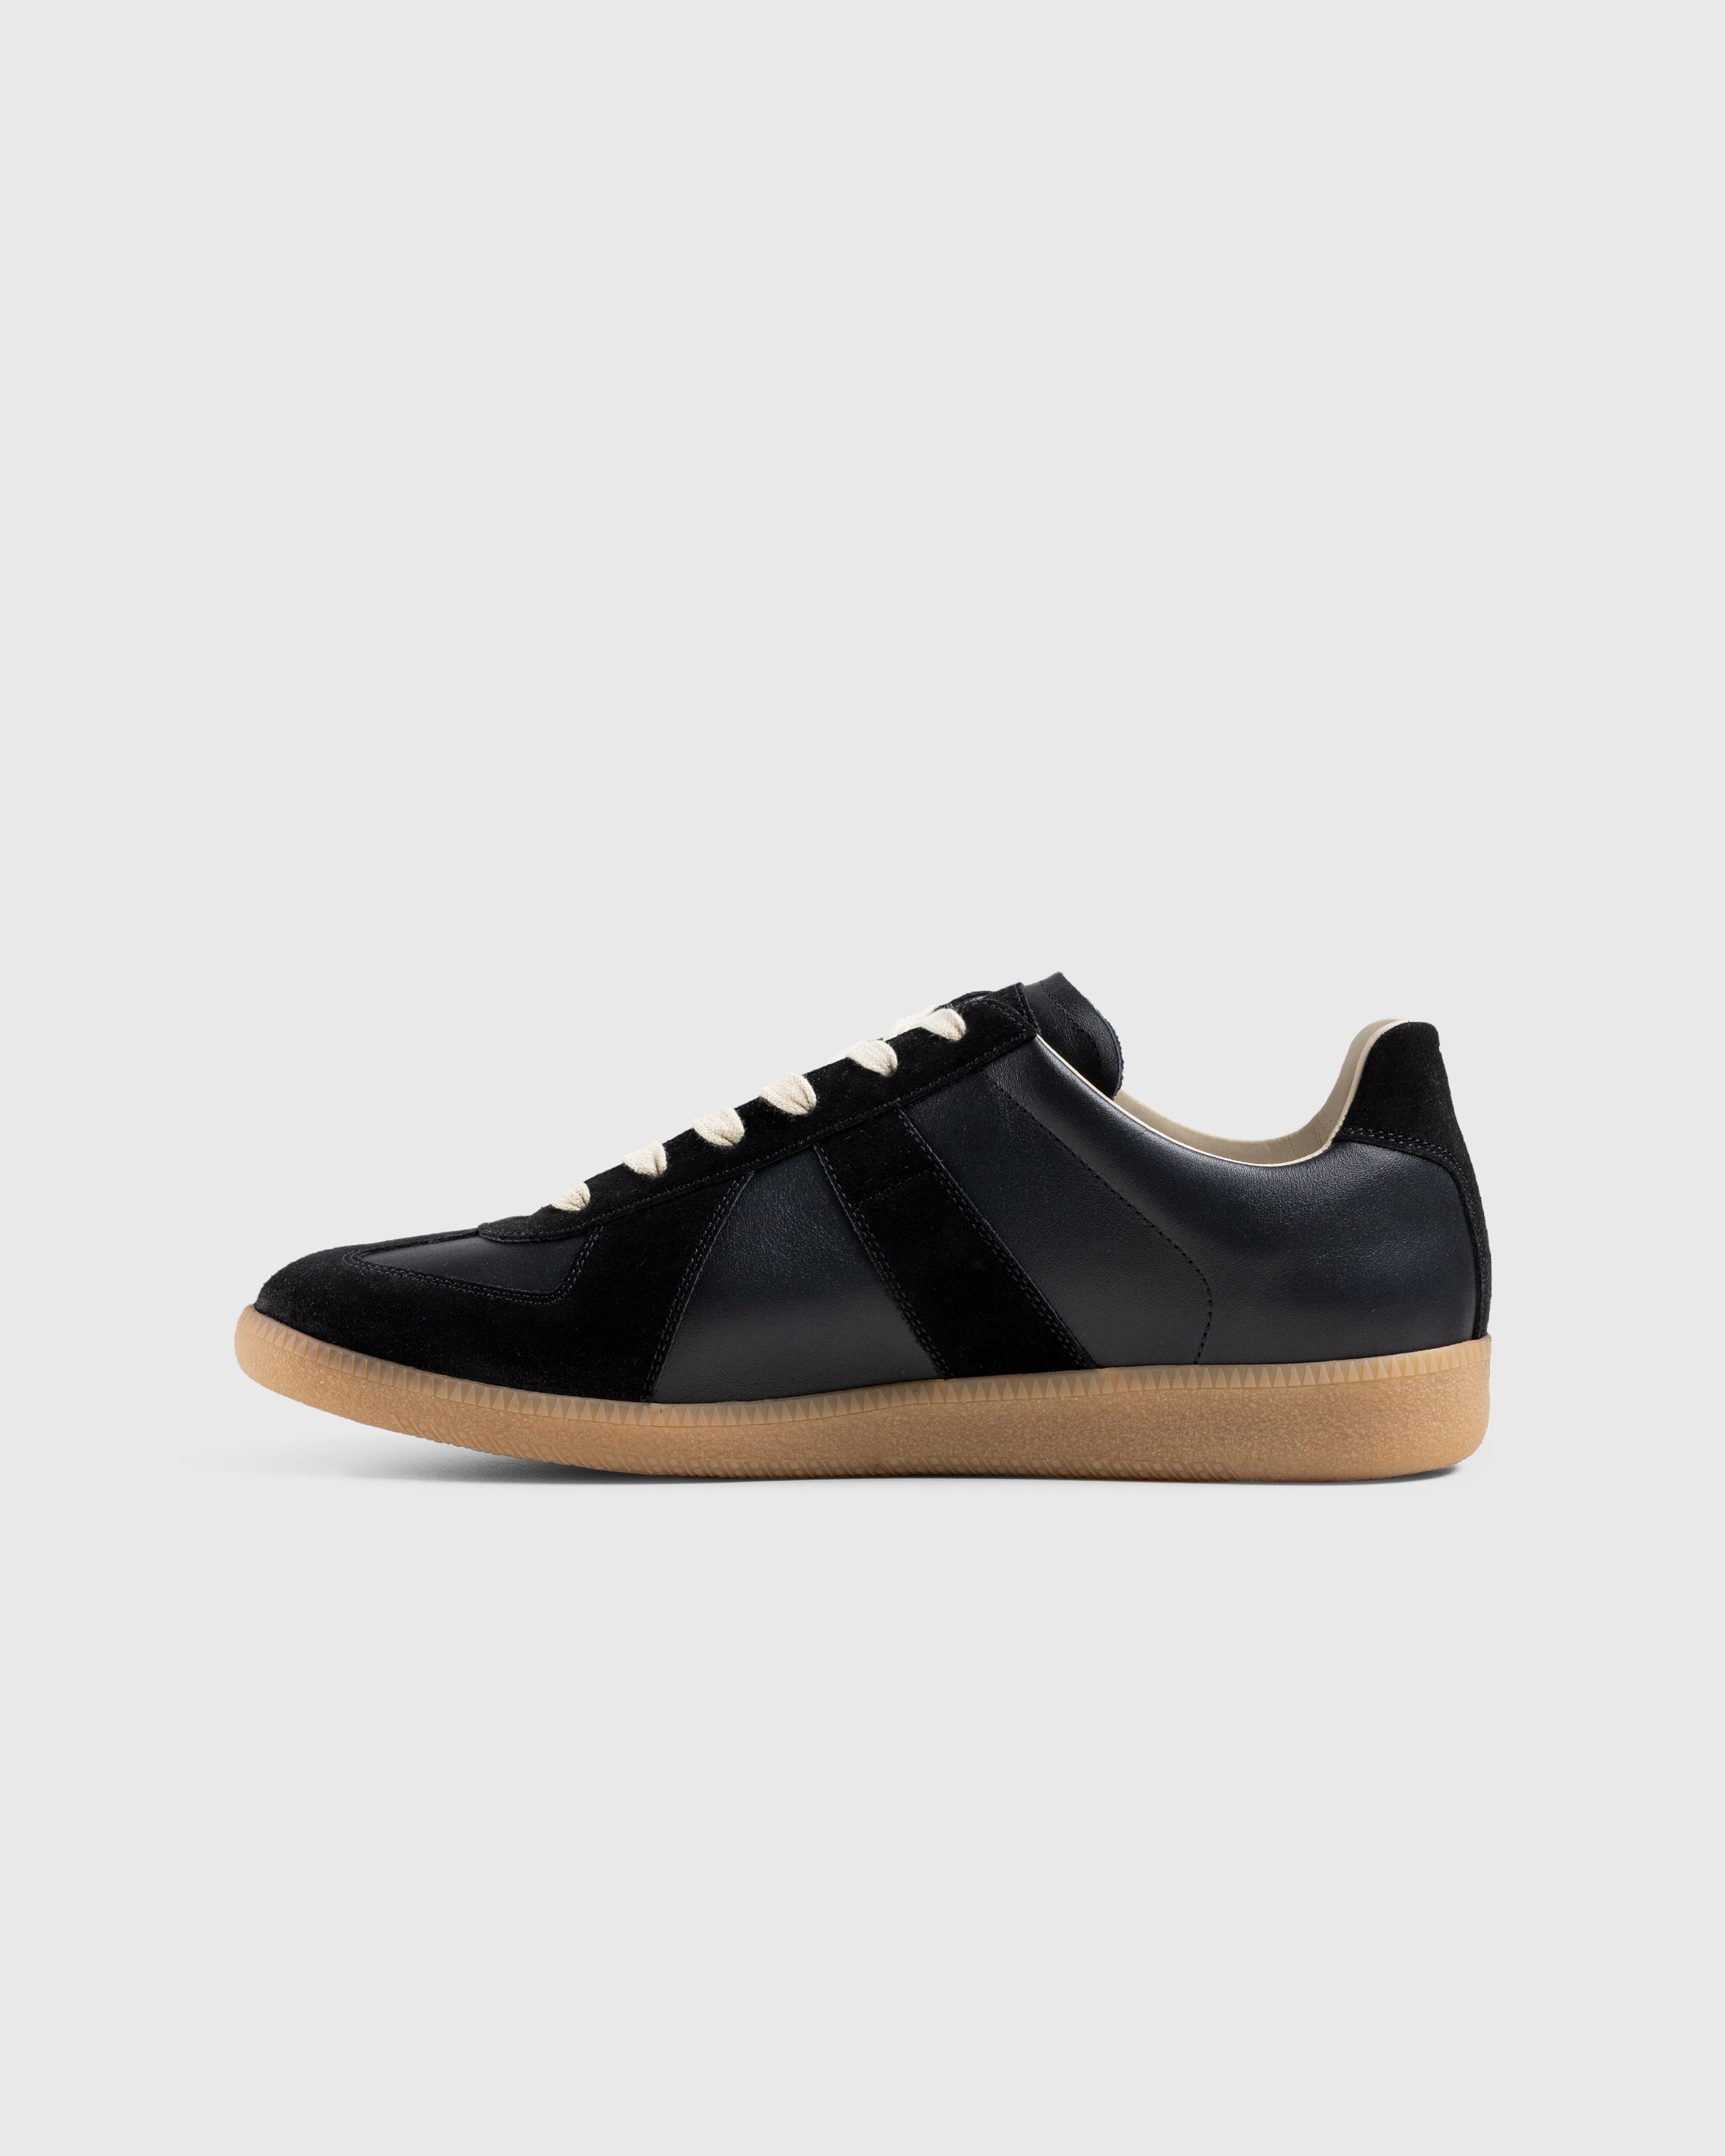 Maison Margiela - Leather Replica Sneakers Black - Footwear - Black - Image 2